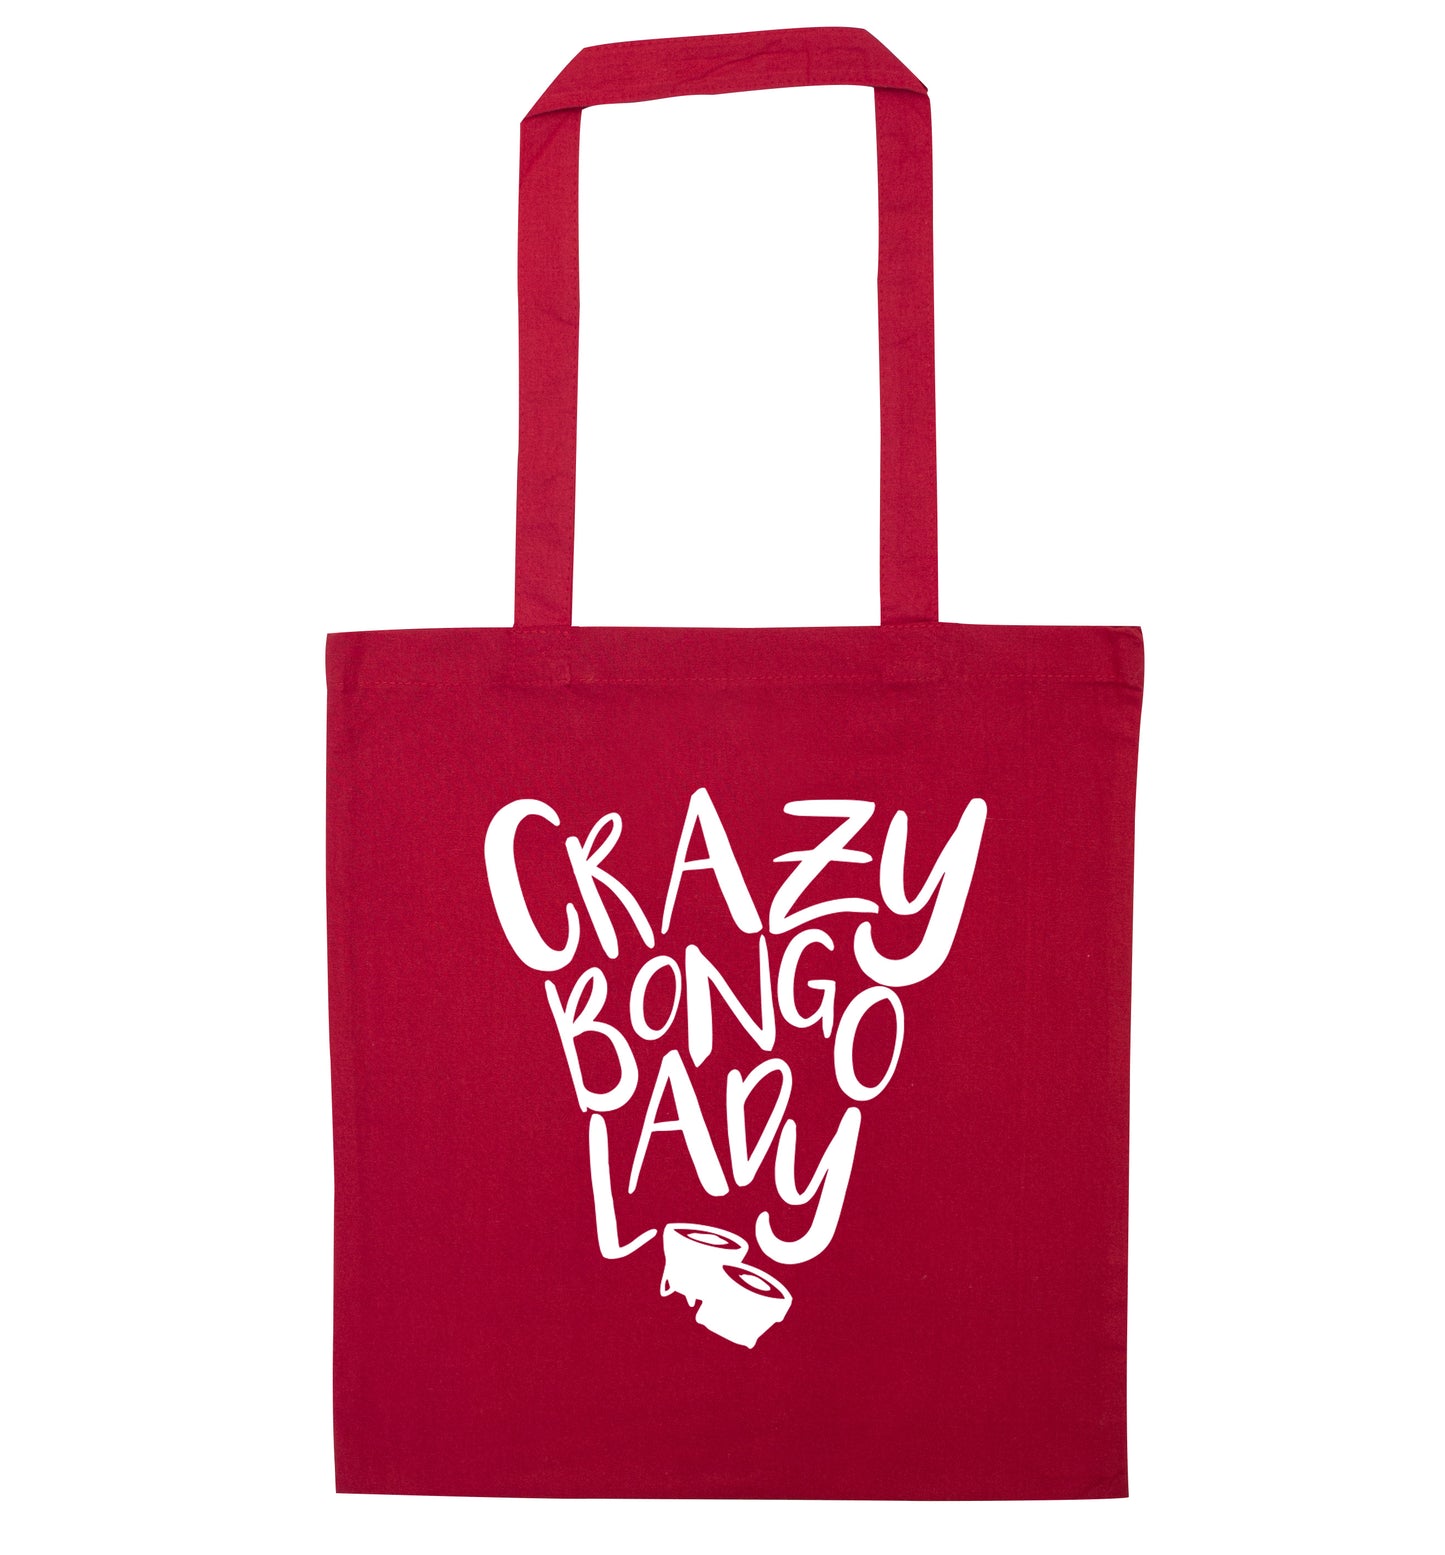 Crazy bongo lady red tote bag